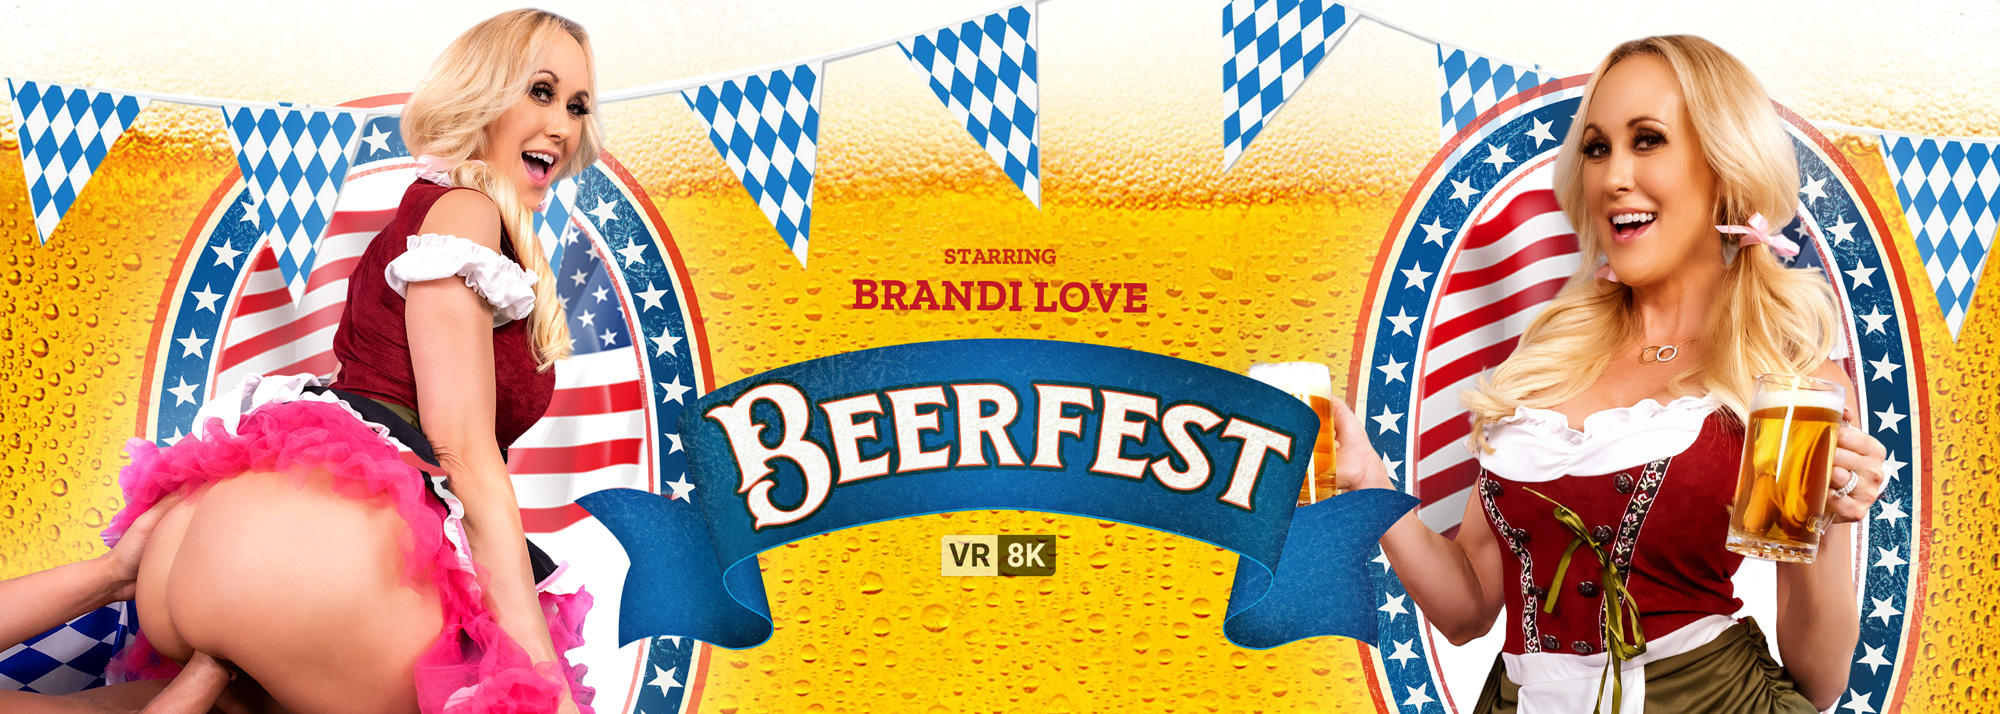 Beerfest with Brandi Love  Slideshow